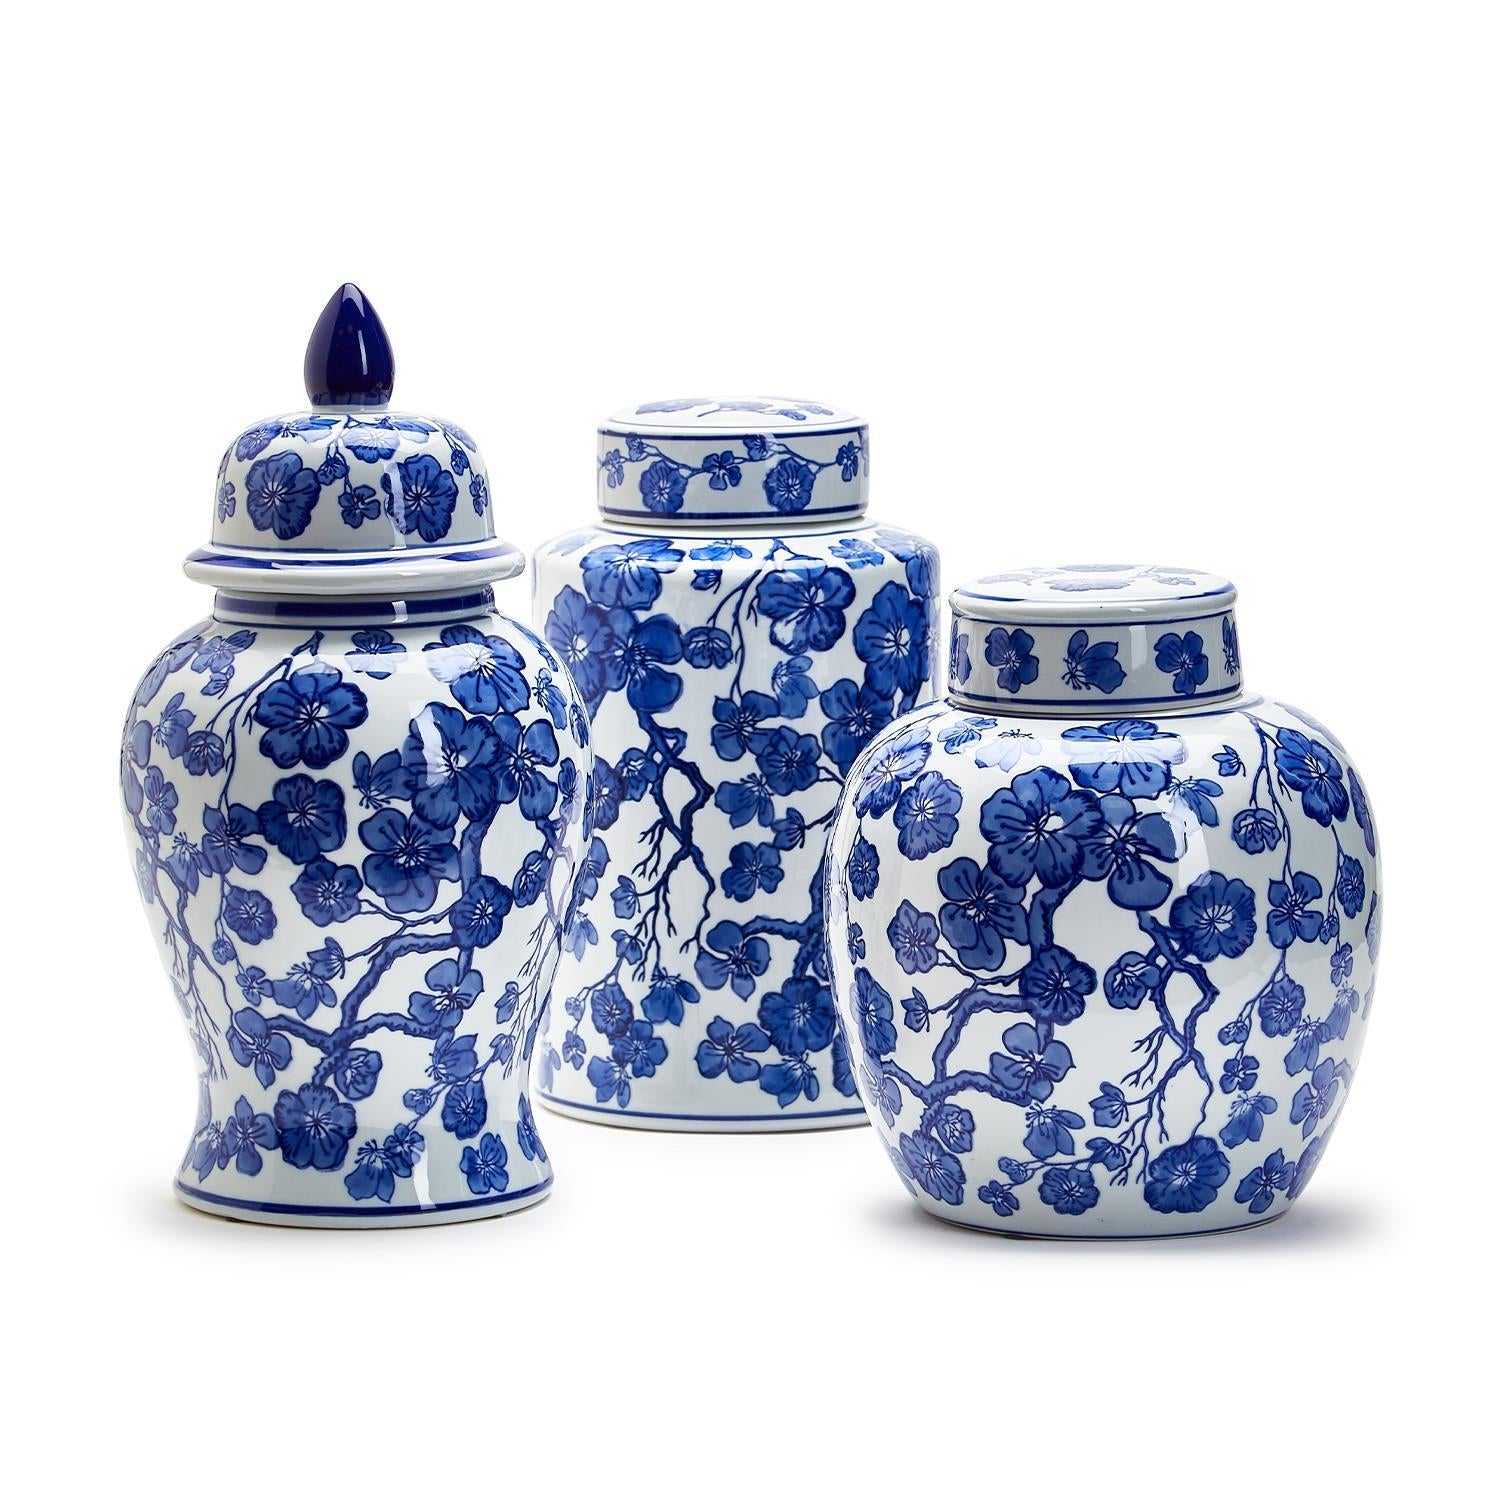 Tozai Home Home Tozai Home Sumida Gardens Set of 3 Blue and White Covered Temple Jar - Ceramic